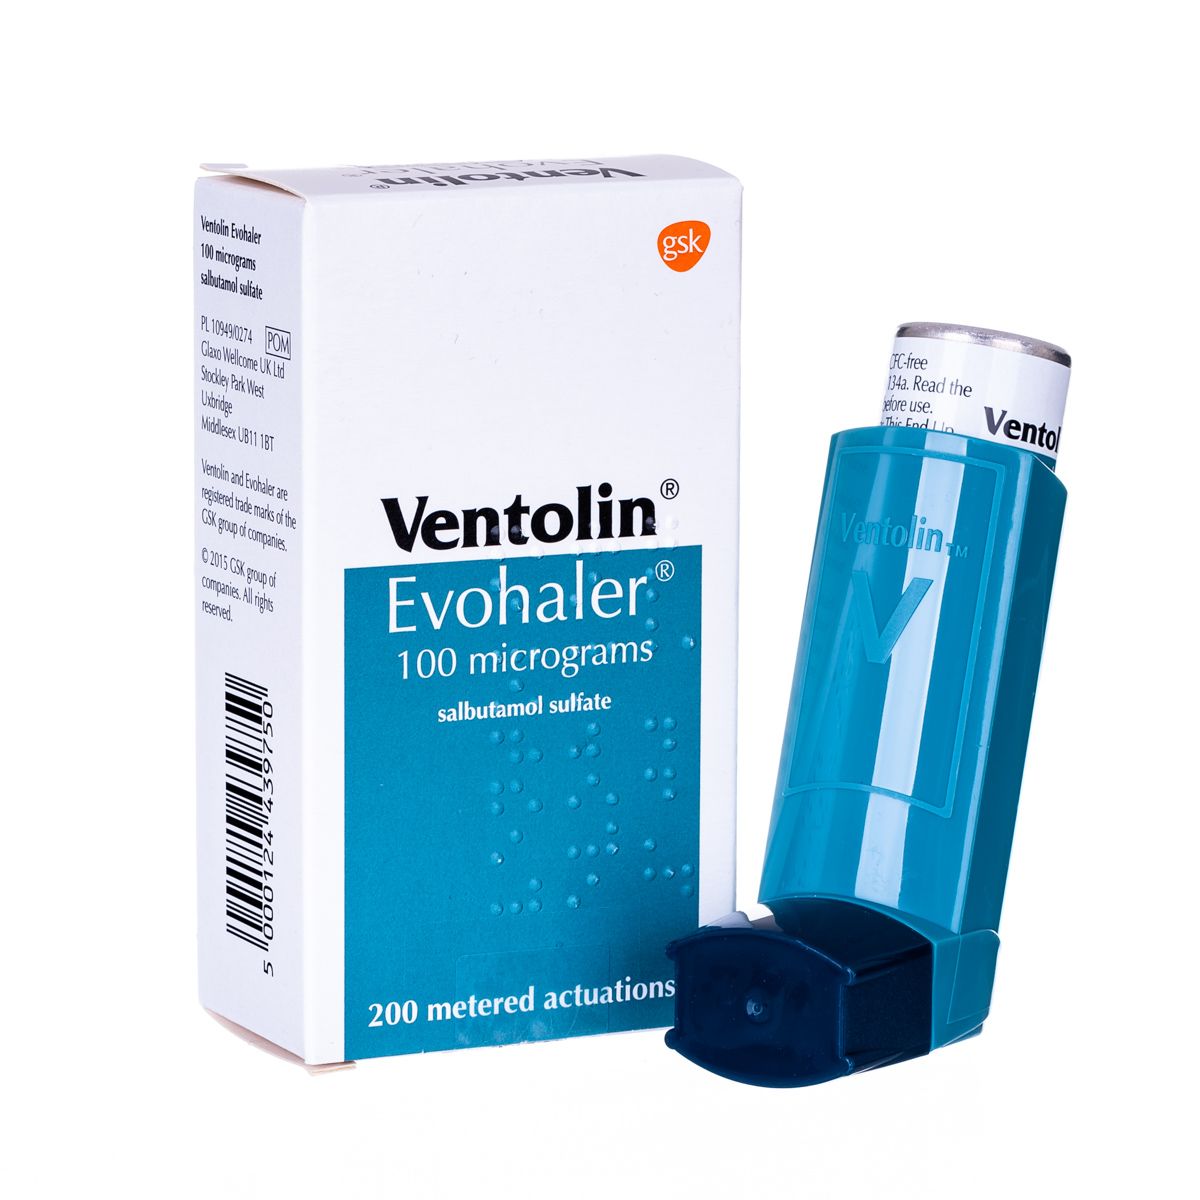 ventolin inhalers to buy